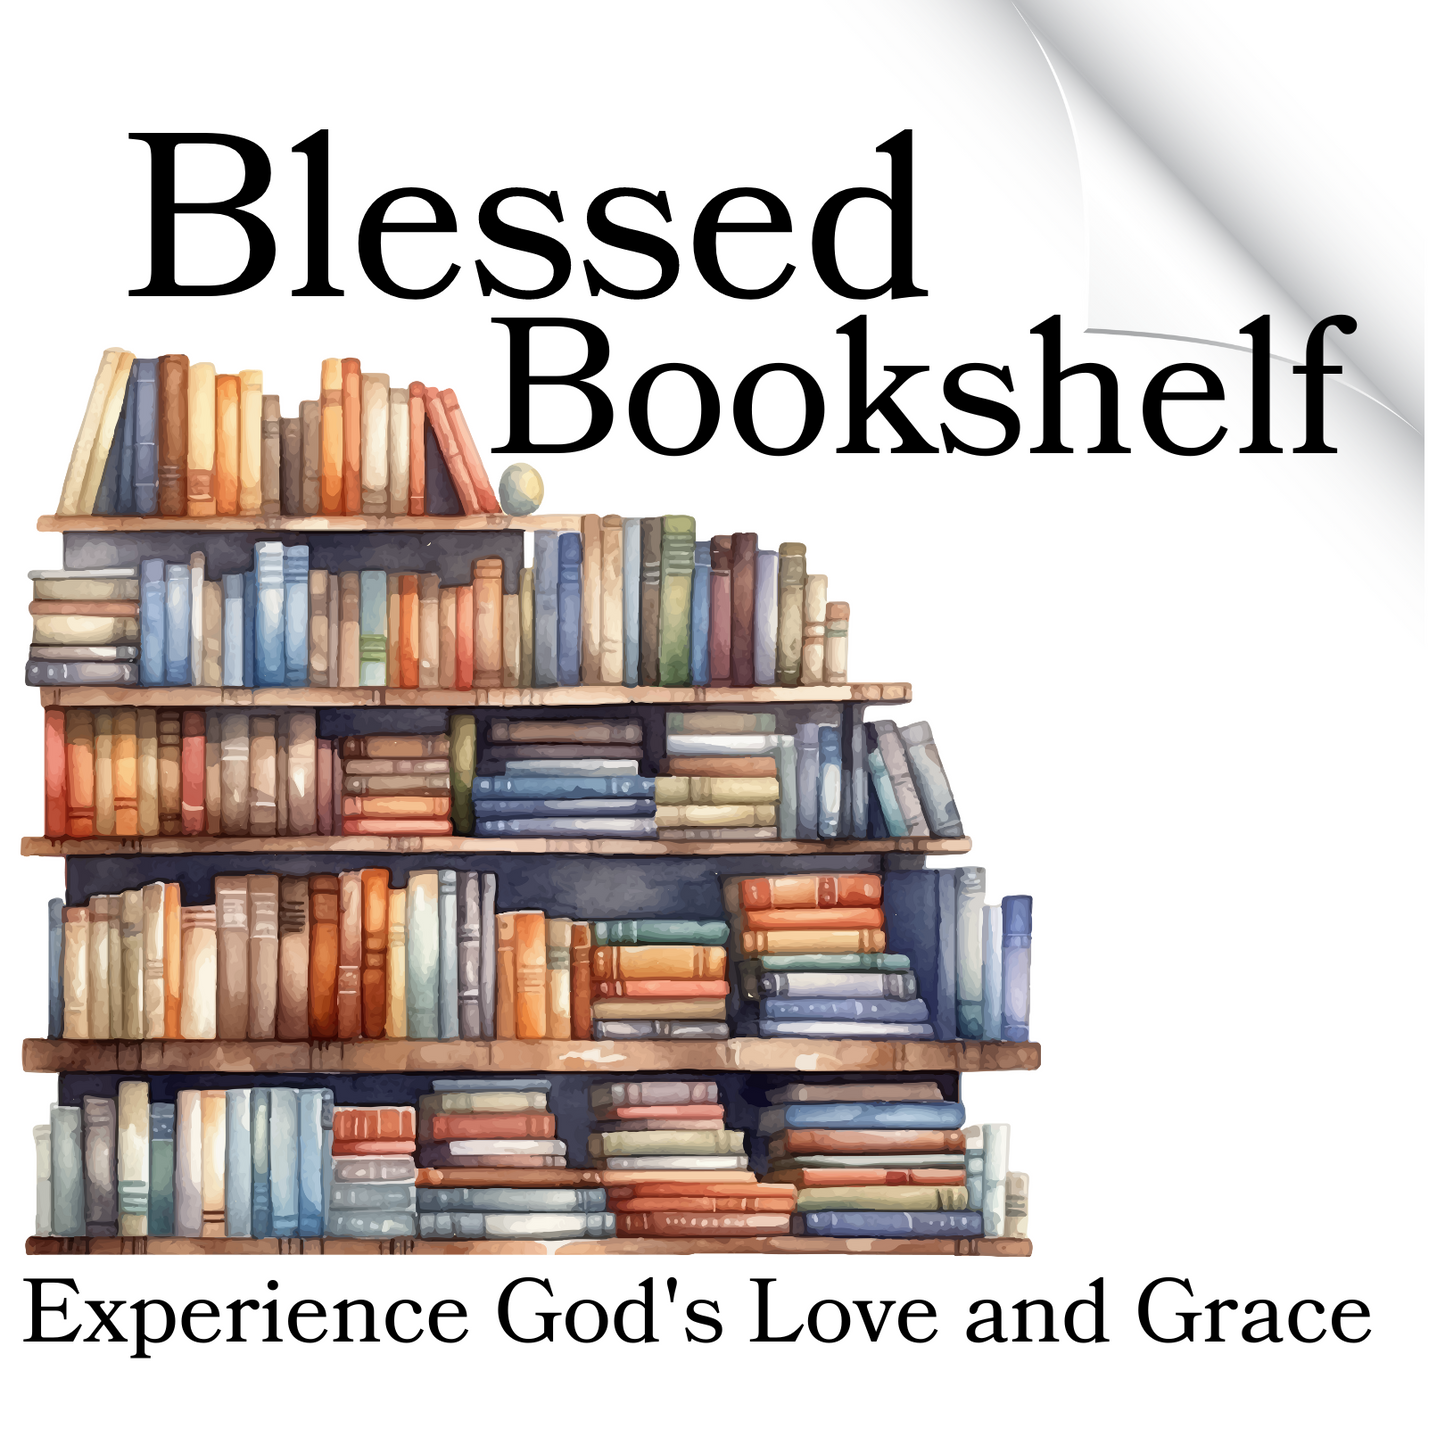 Blessed Bookshelf Subscription Book Club